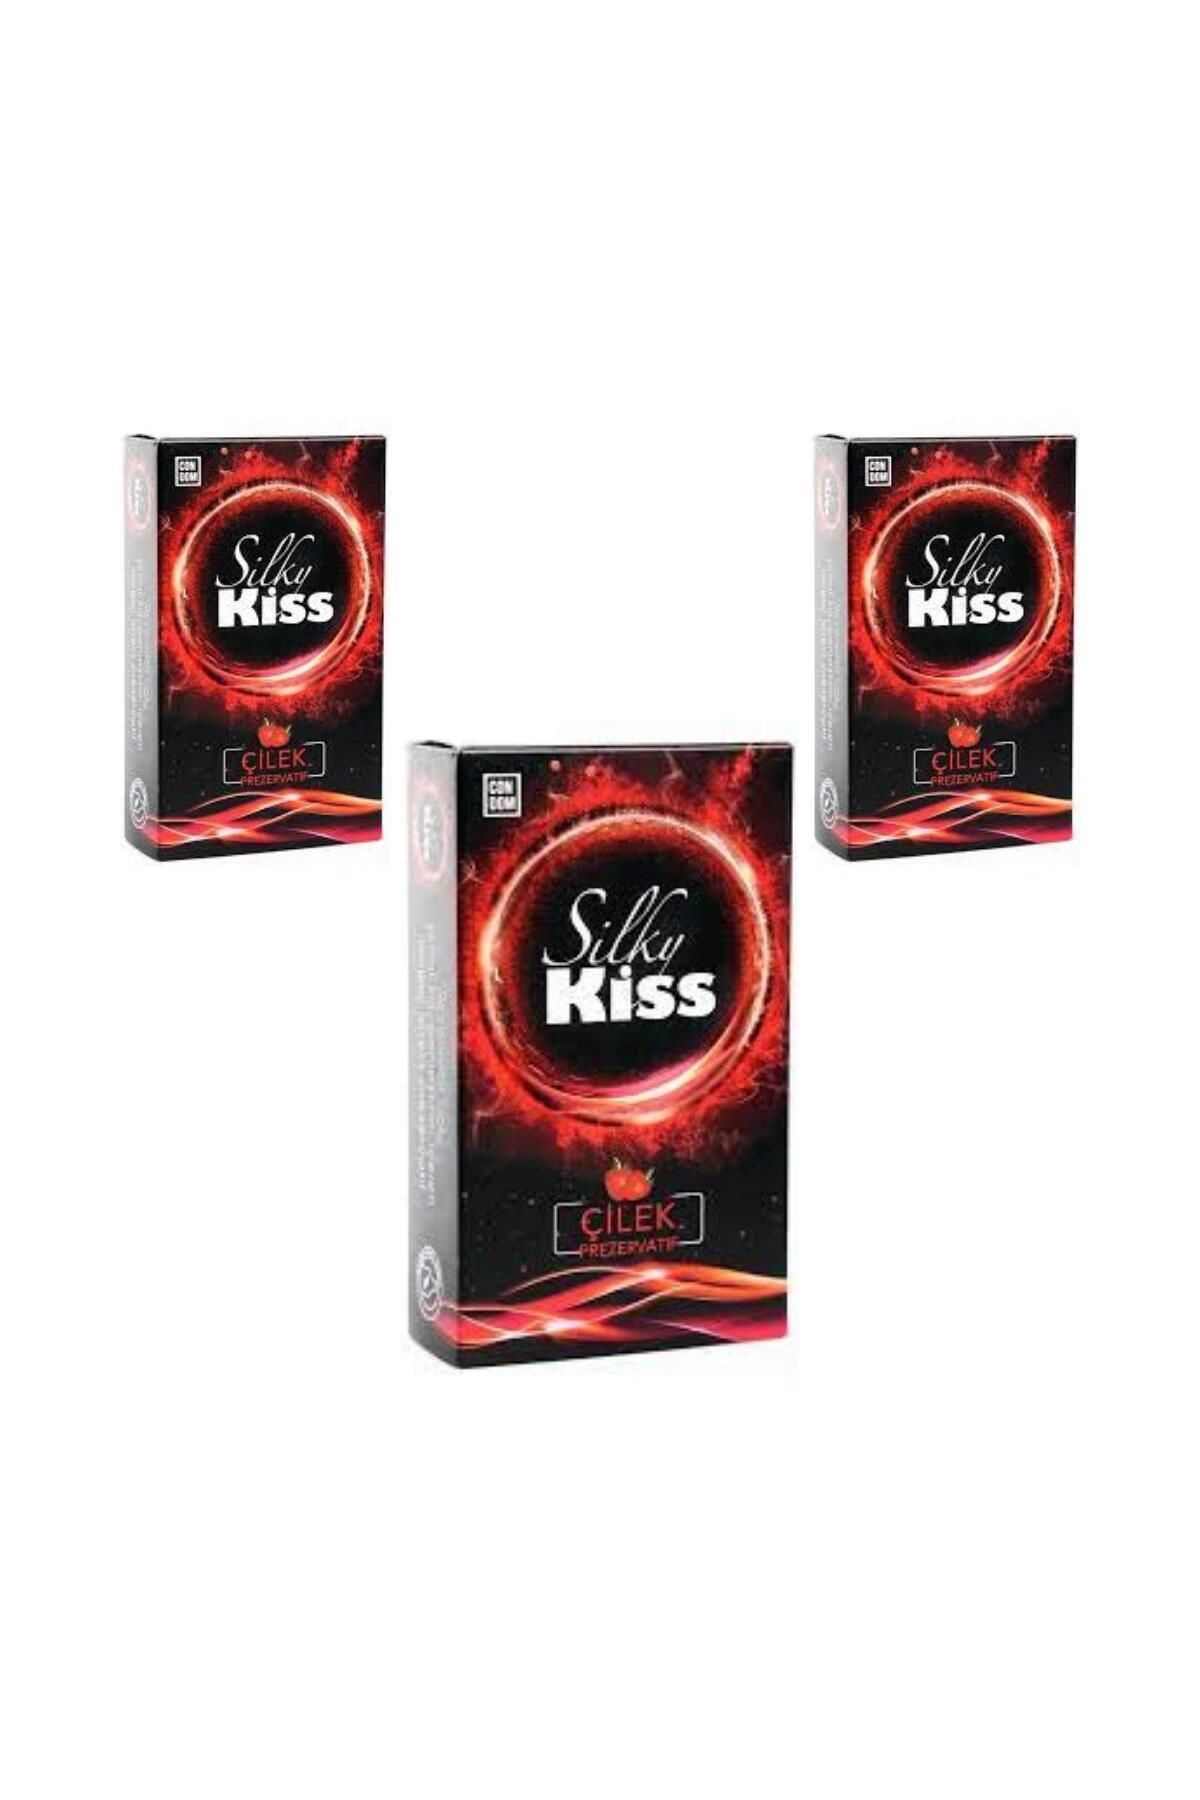 Silky Kiss SİLKY KİSS - PREZERVATİF ÇİLEK 12Lİ LATEX KONDOM - 3 PAKET